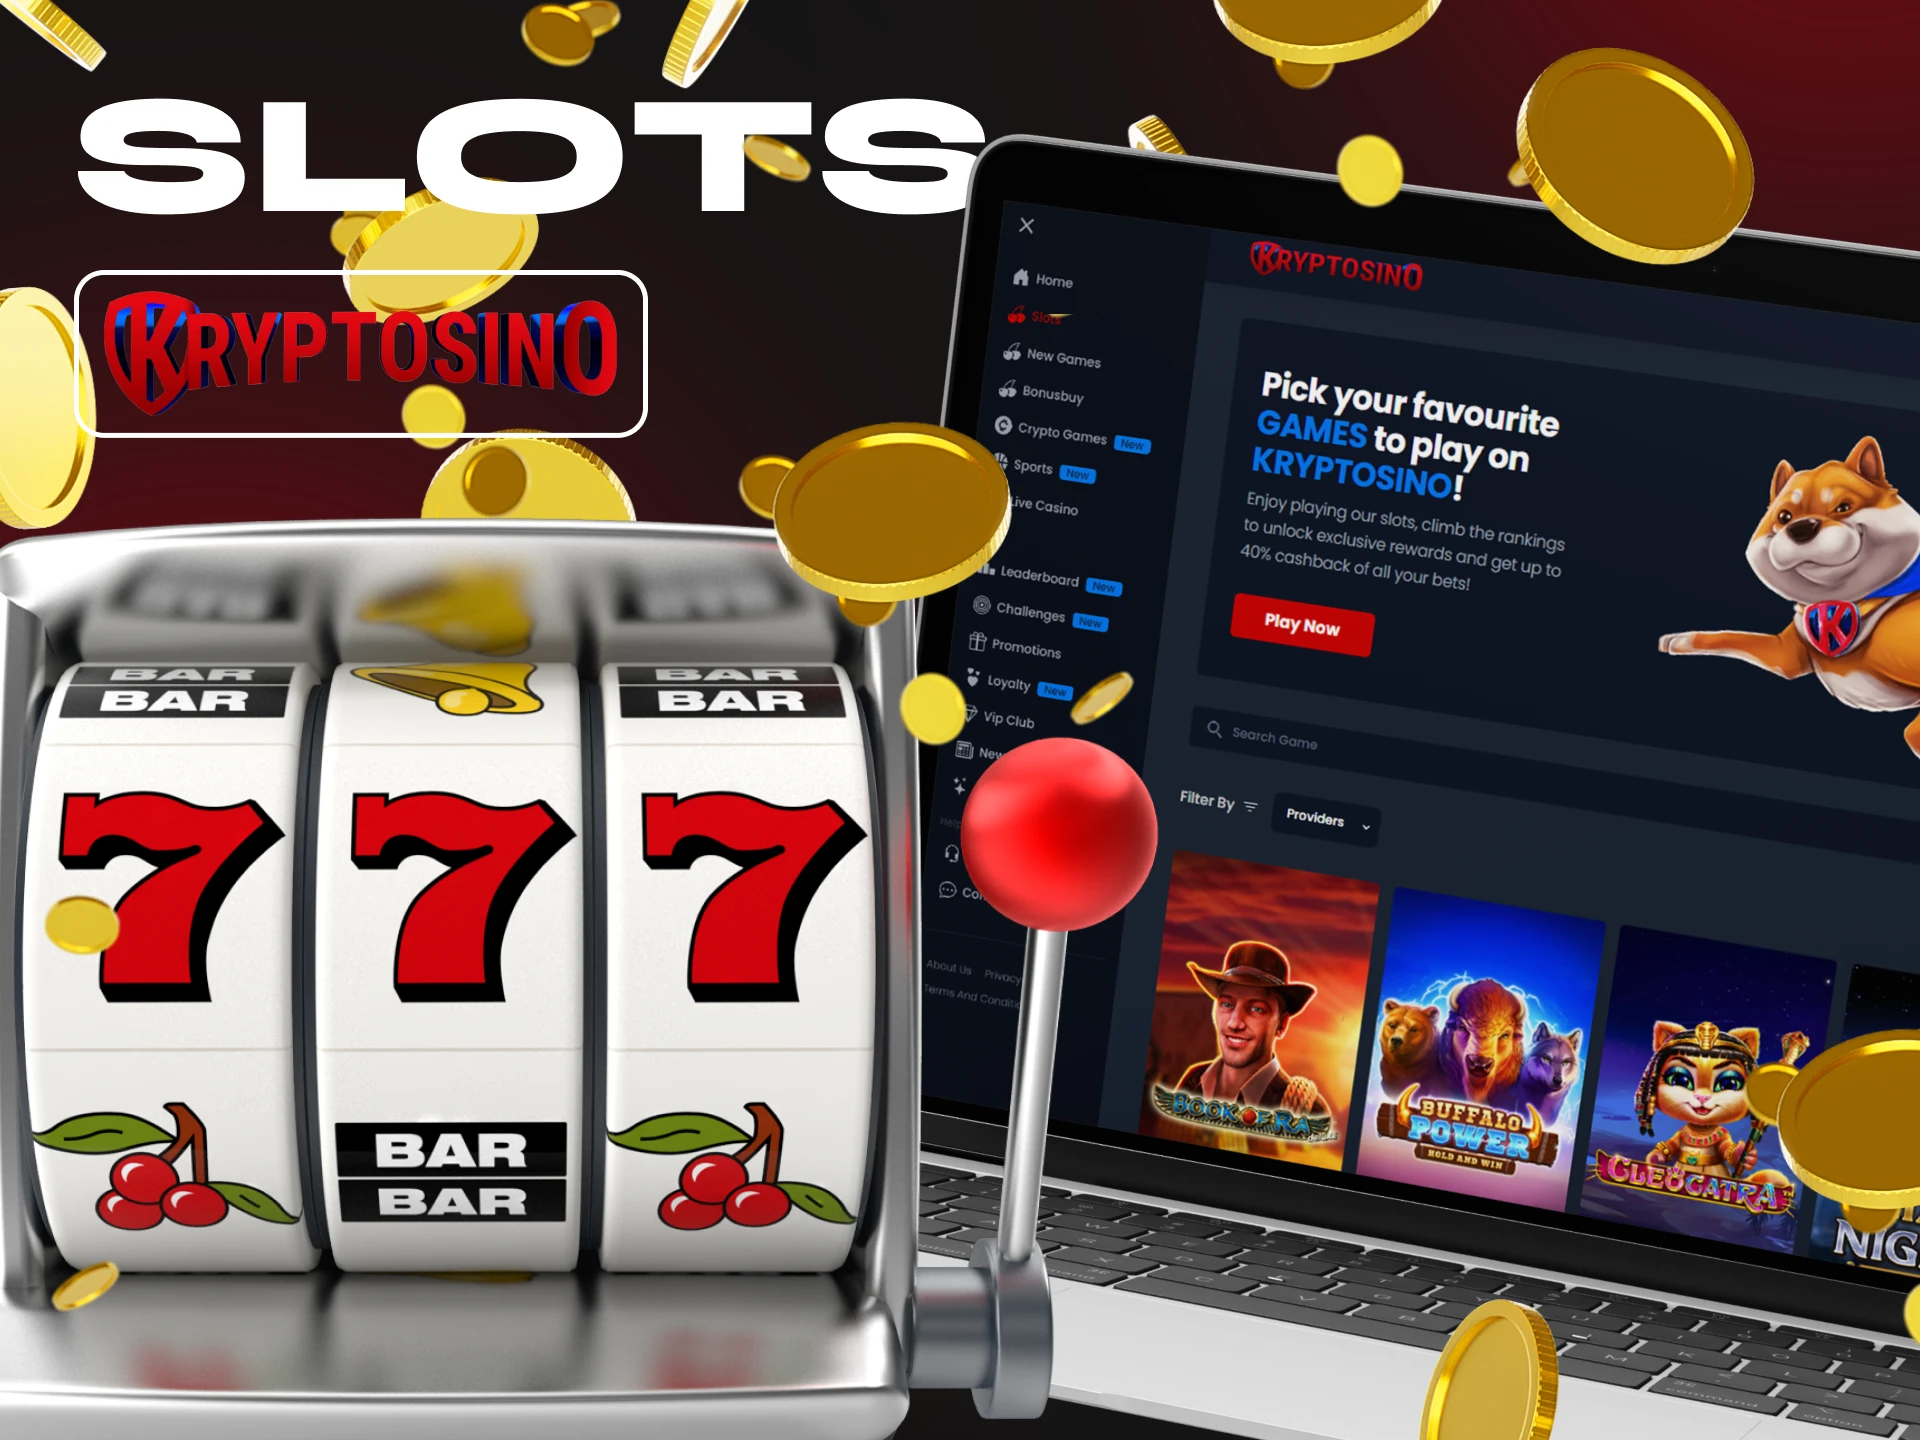 Play exciting slots games at the Kryptosino crypto casino.